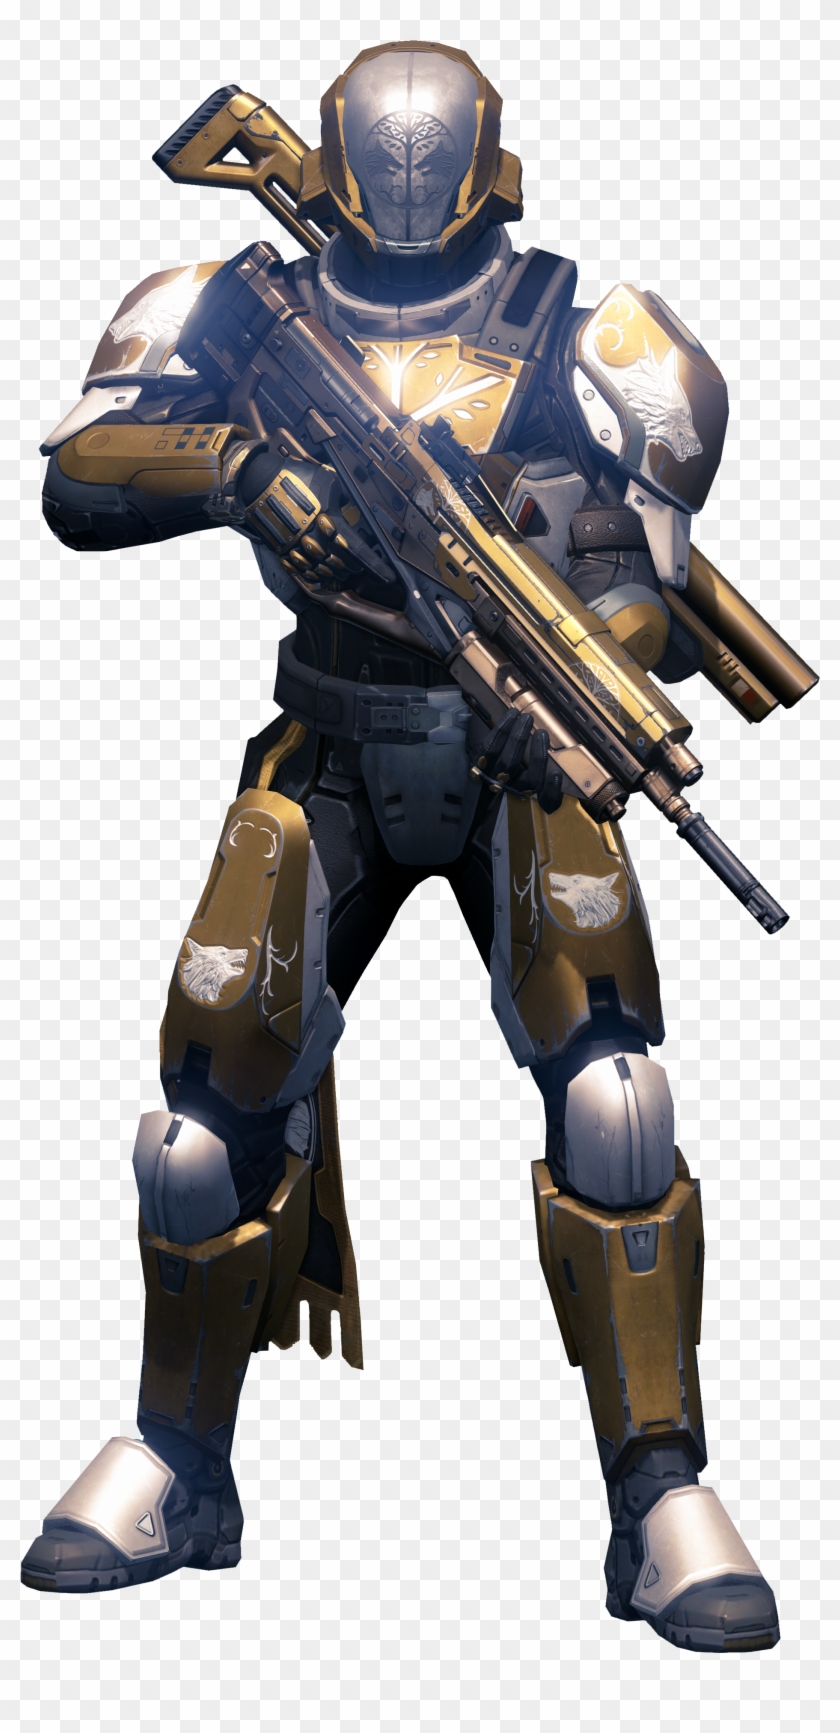 Destiny Titan Armor Iron Banner - Action Figure Clipart